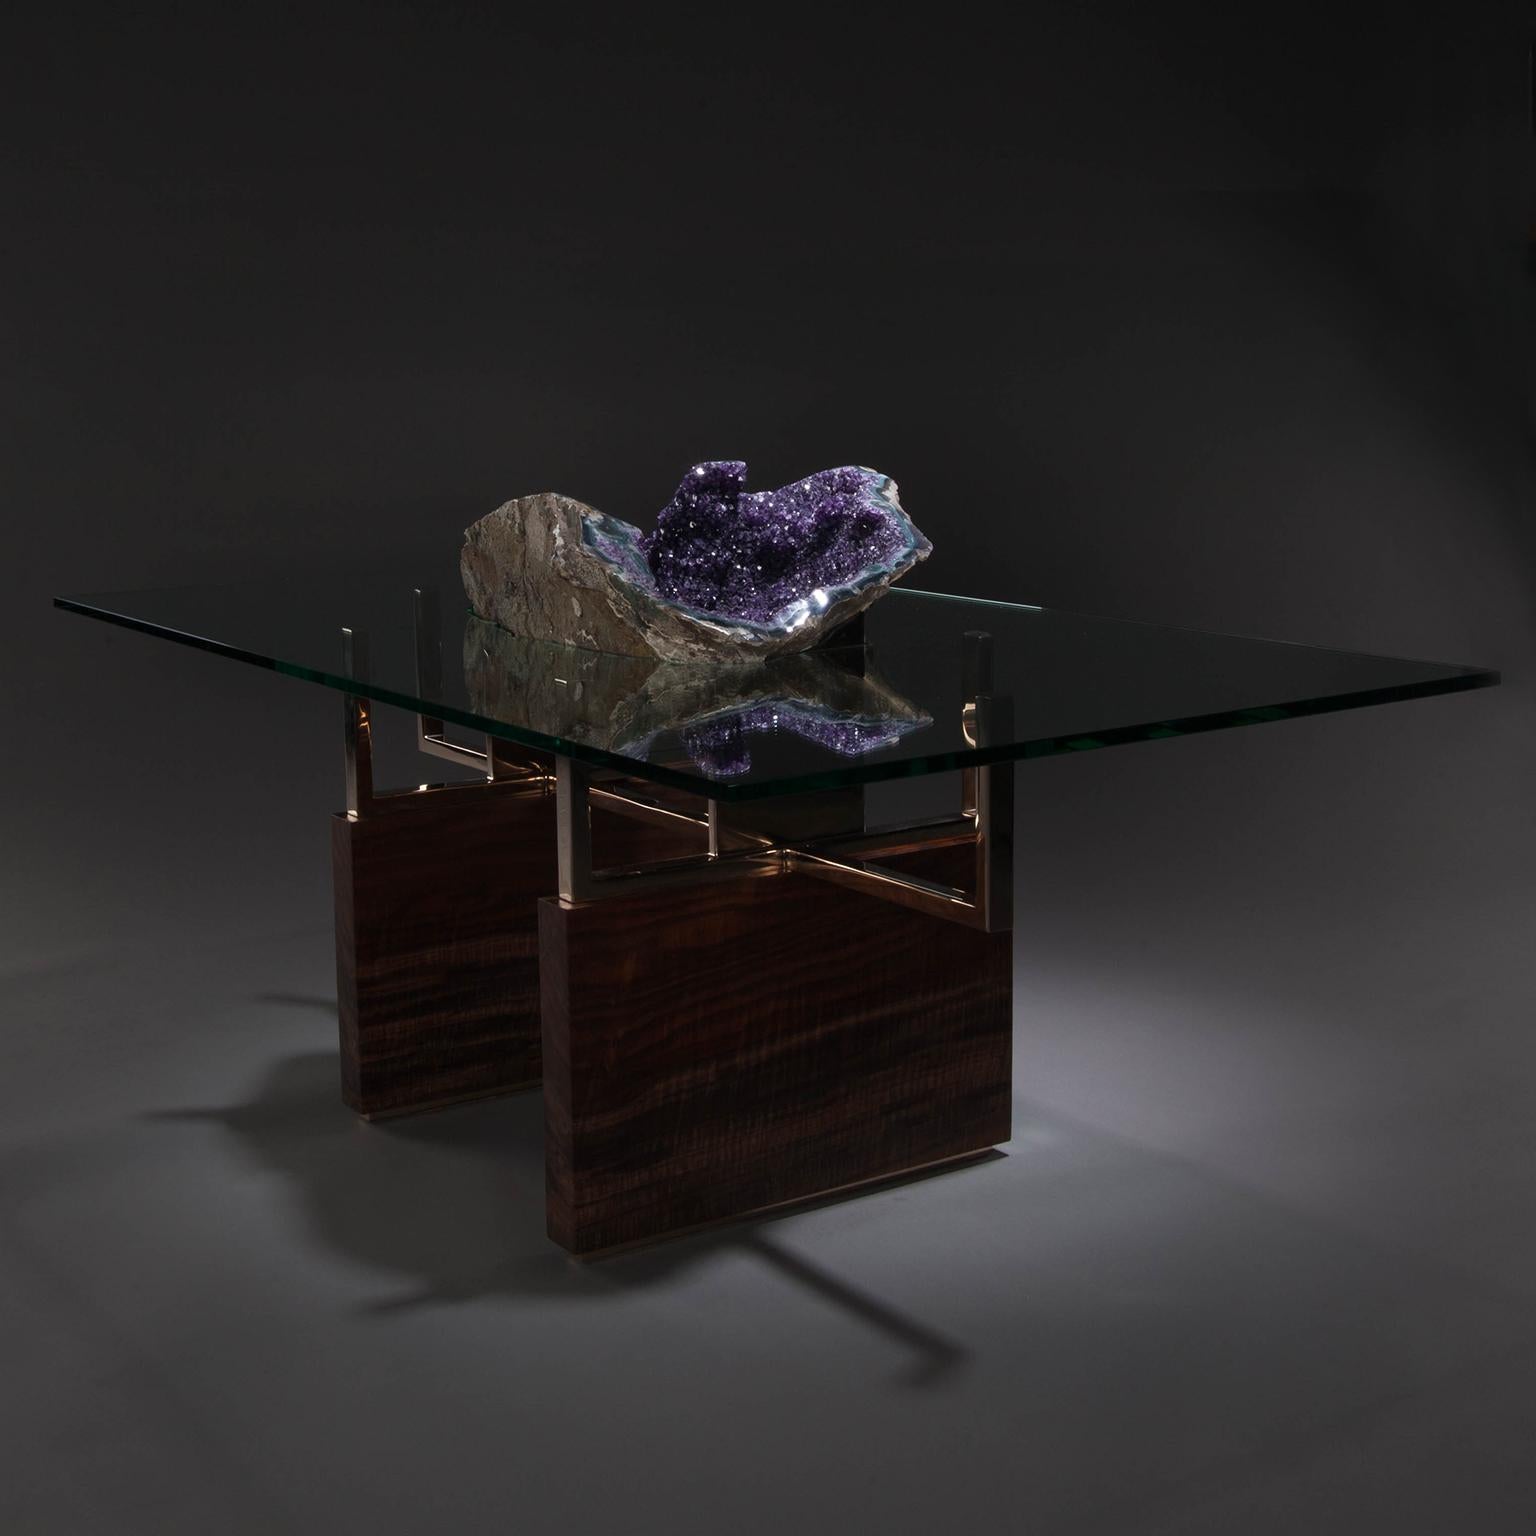 American Studio Greytak 'Iceberg Table 1' with Amethyst, Polished Bronze, and Burl Walnut For Sale